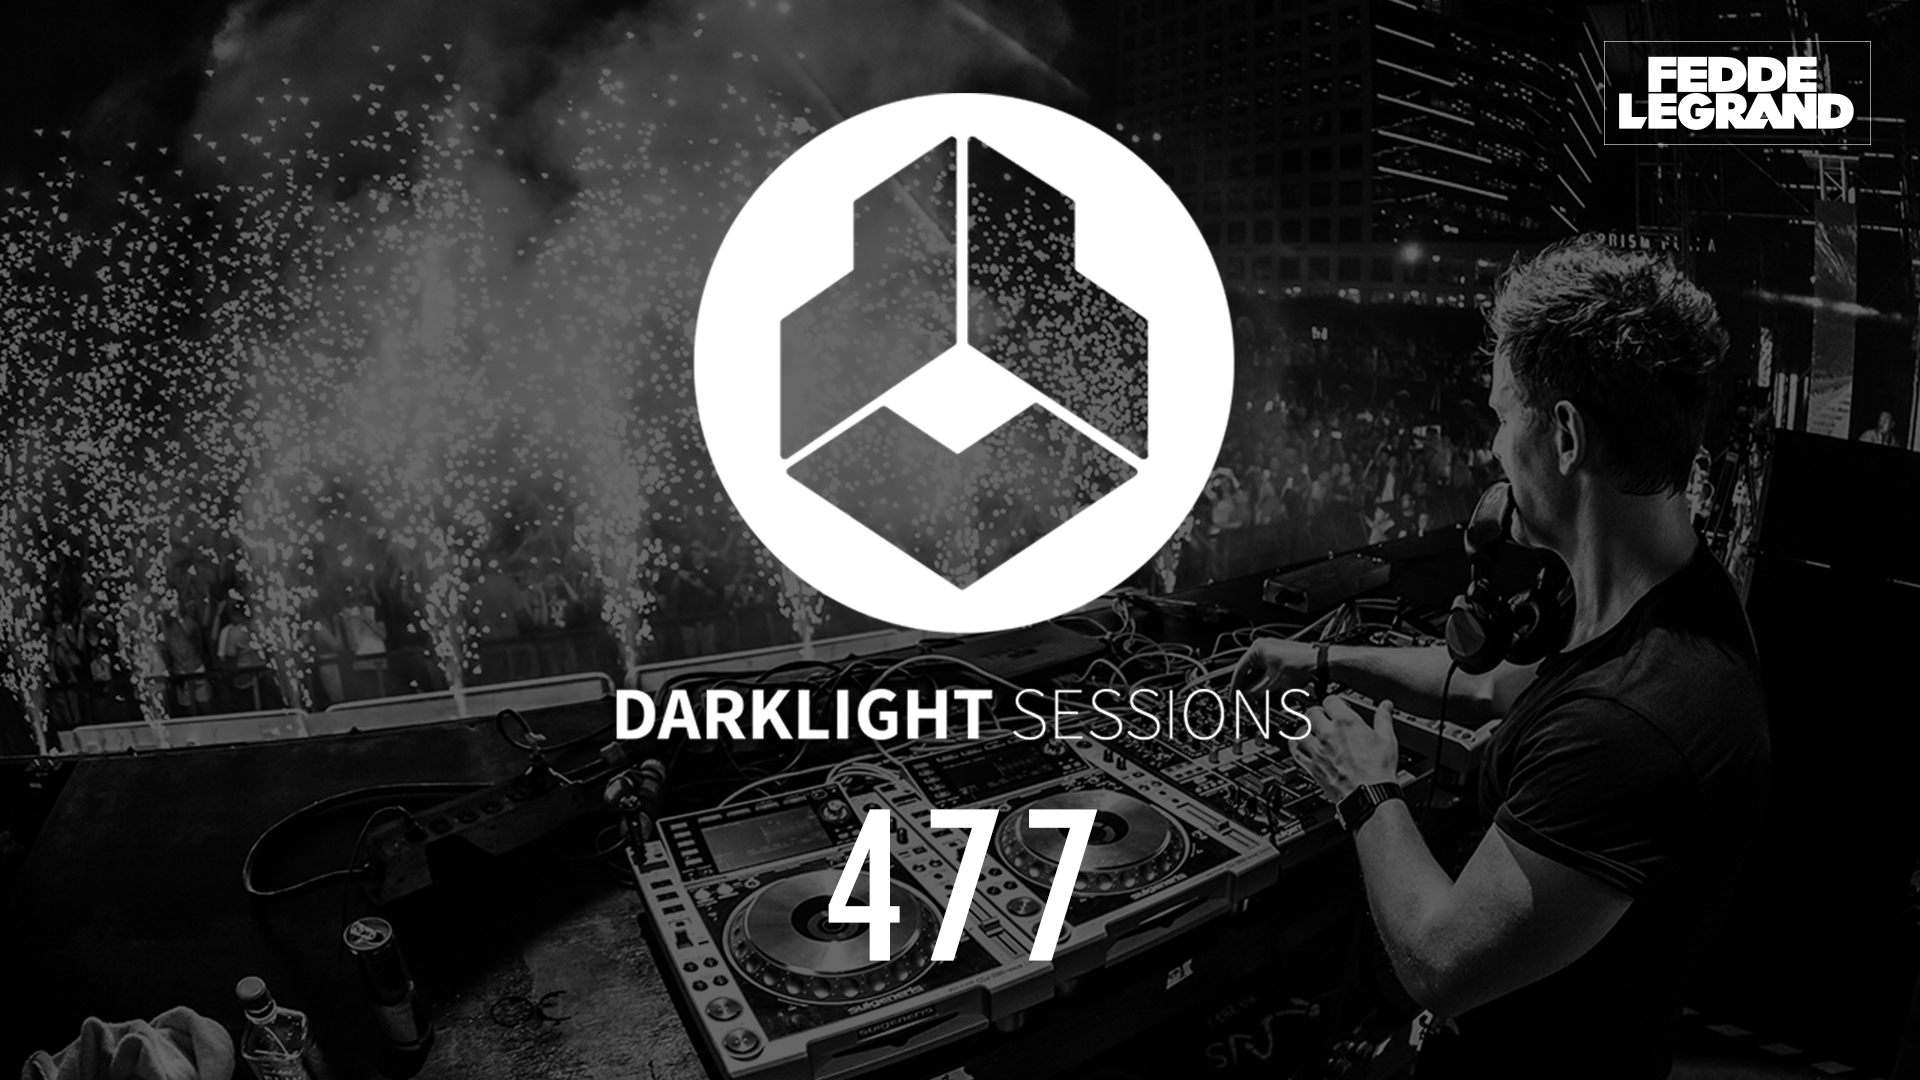 Darklight Sessions 477